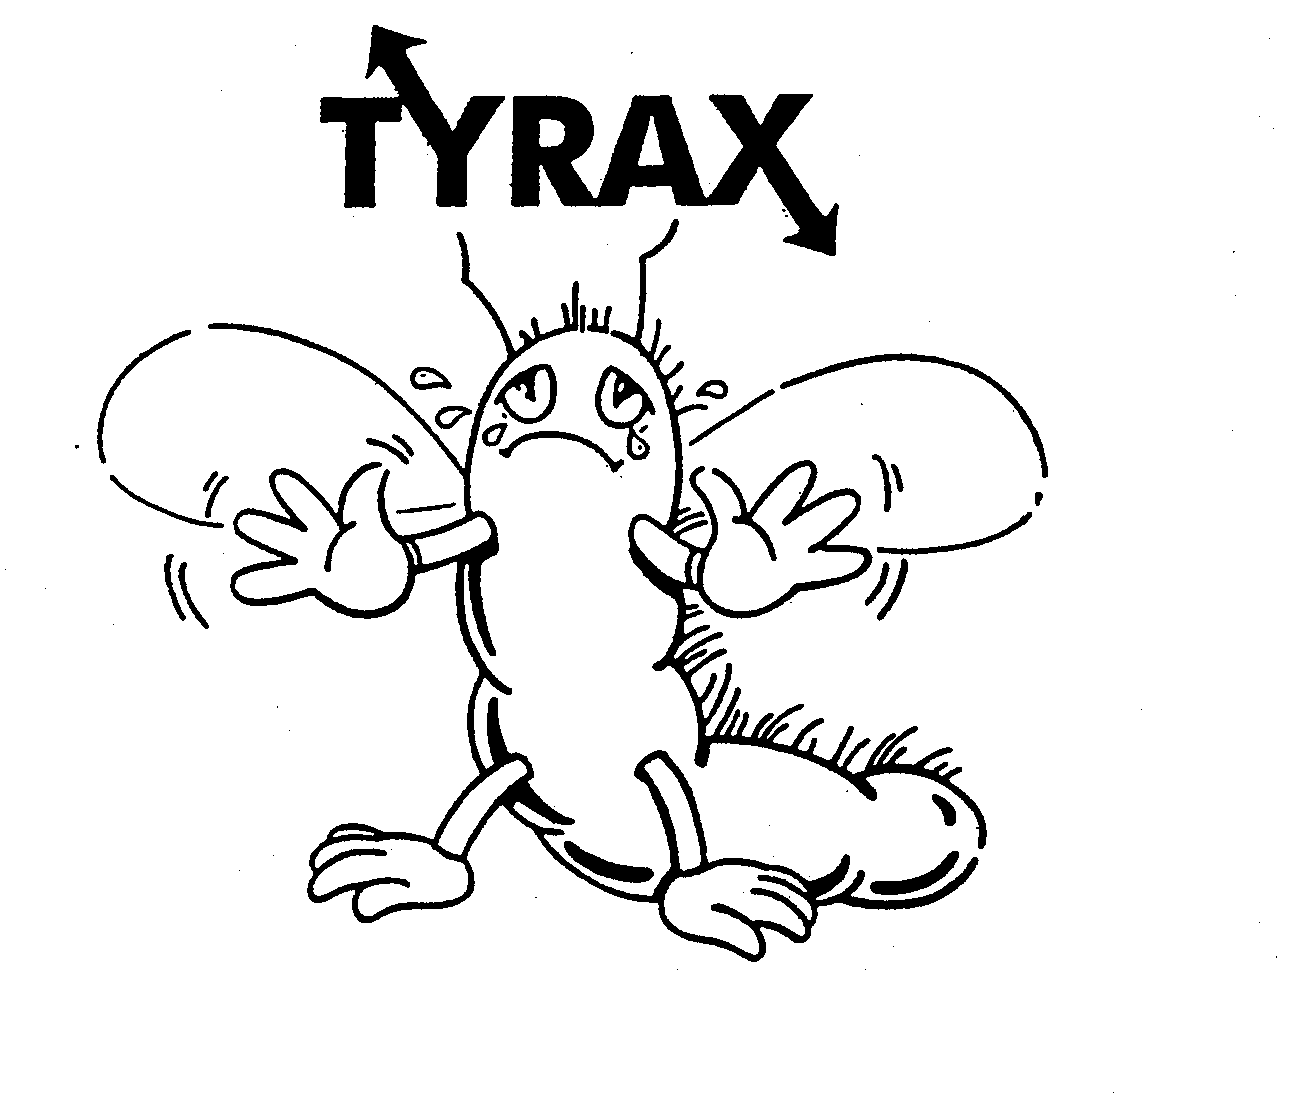 TYRAX